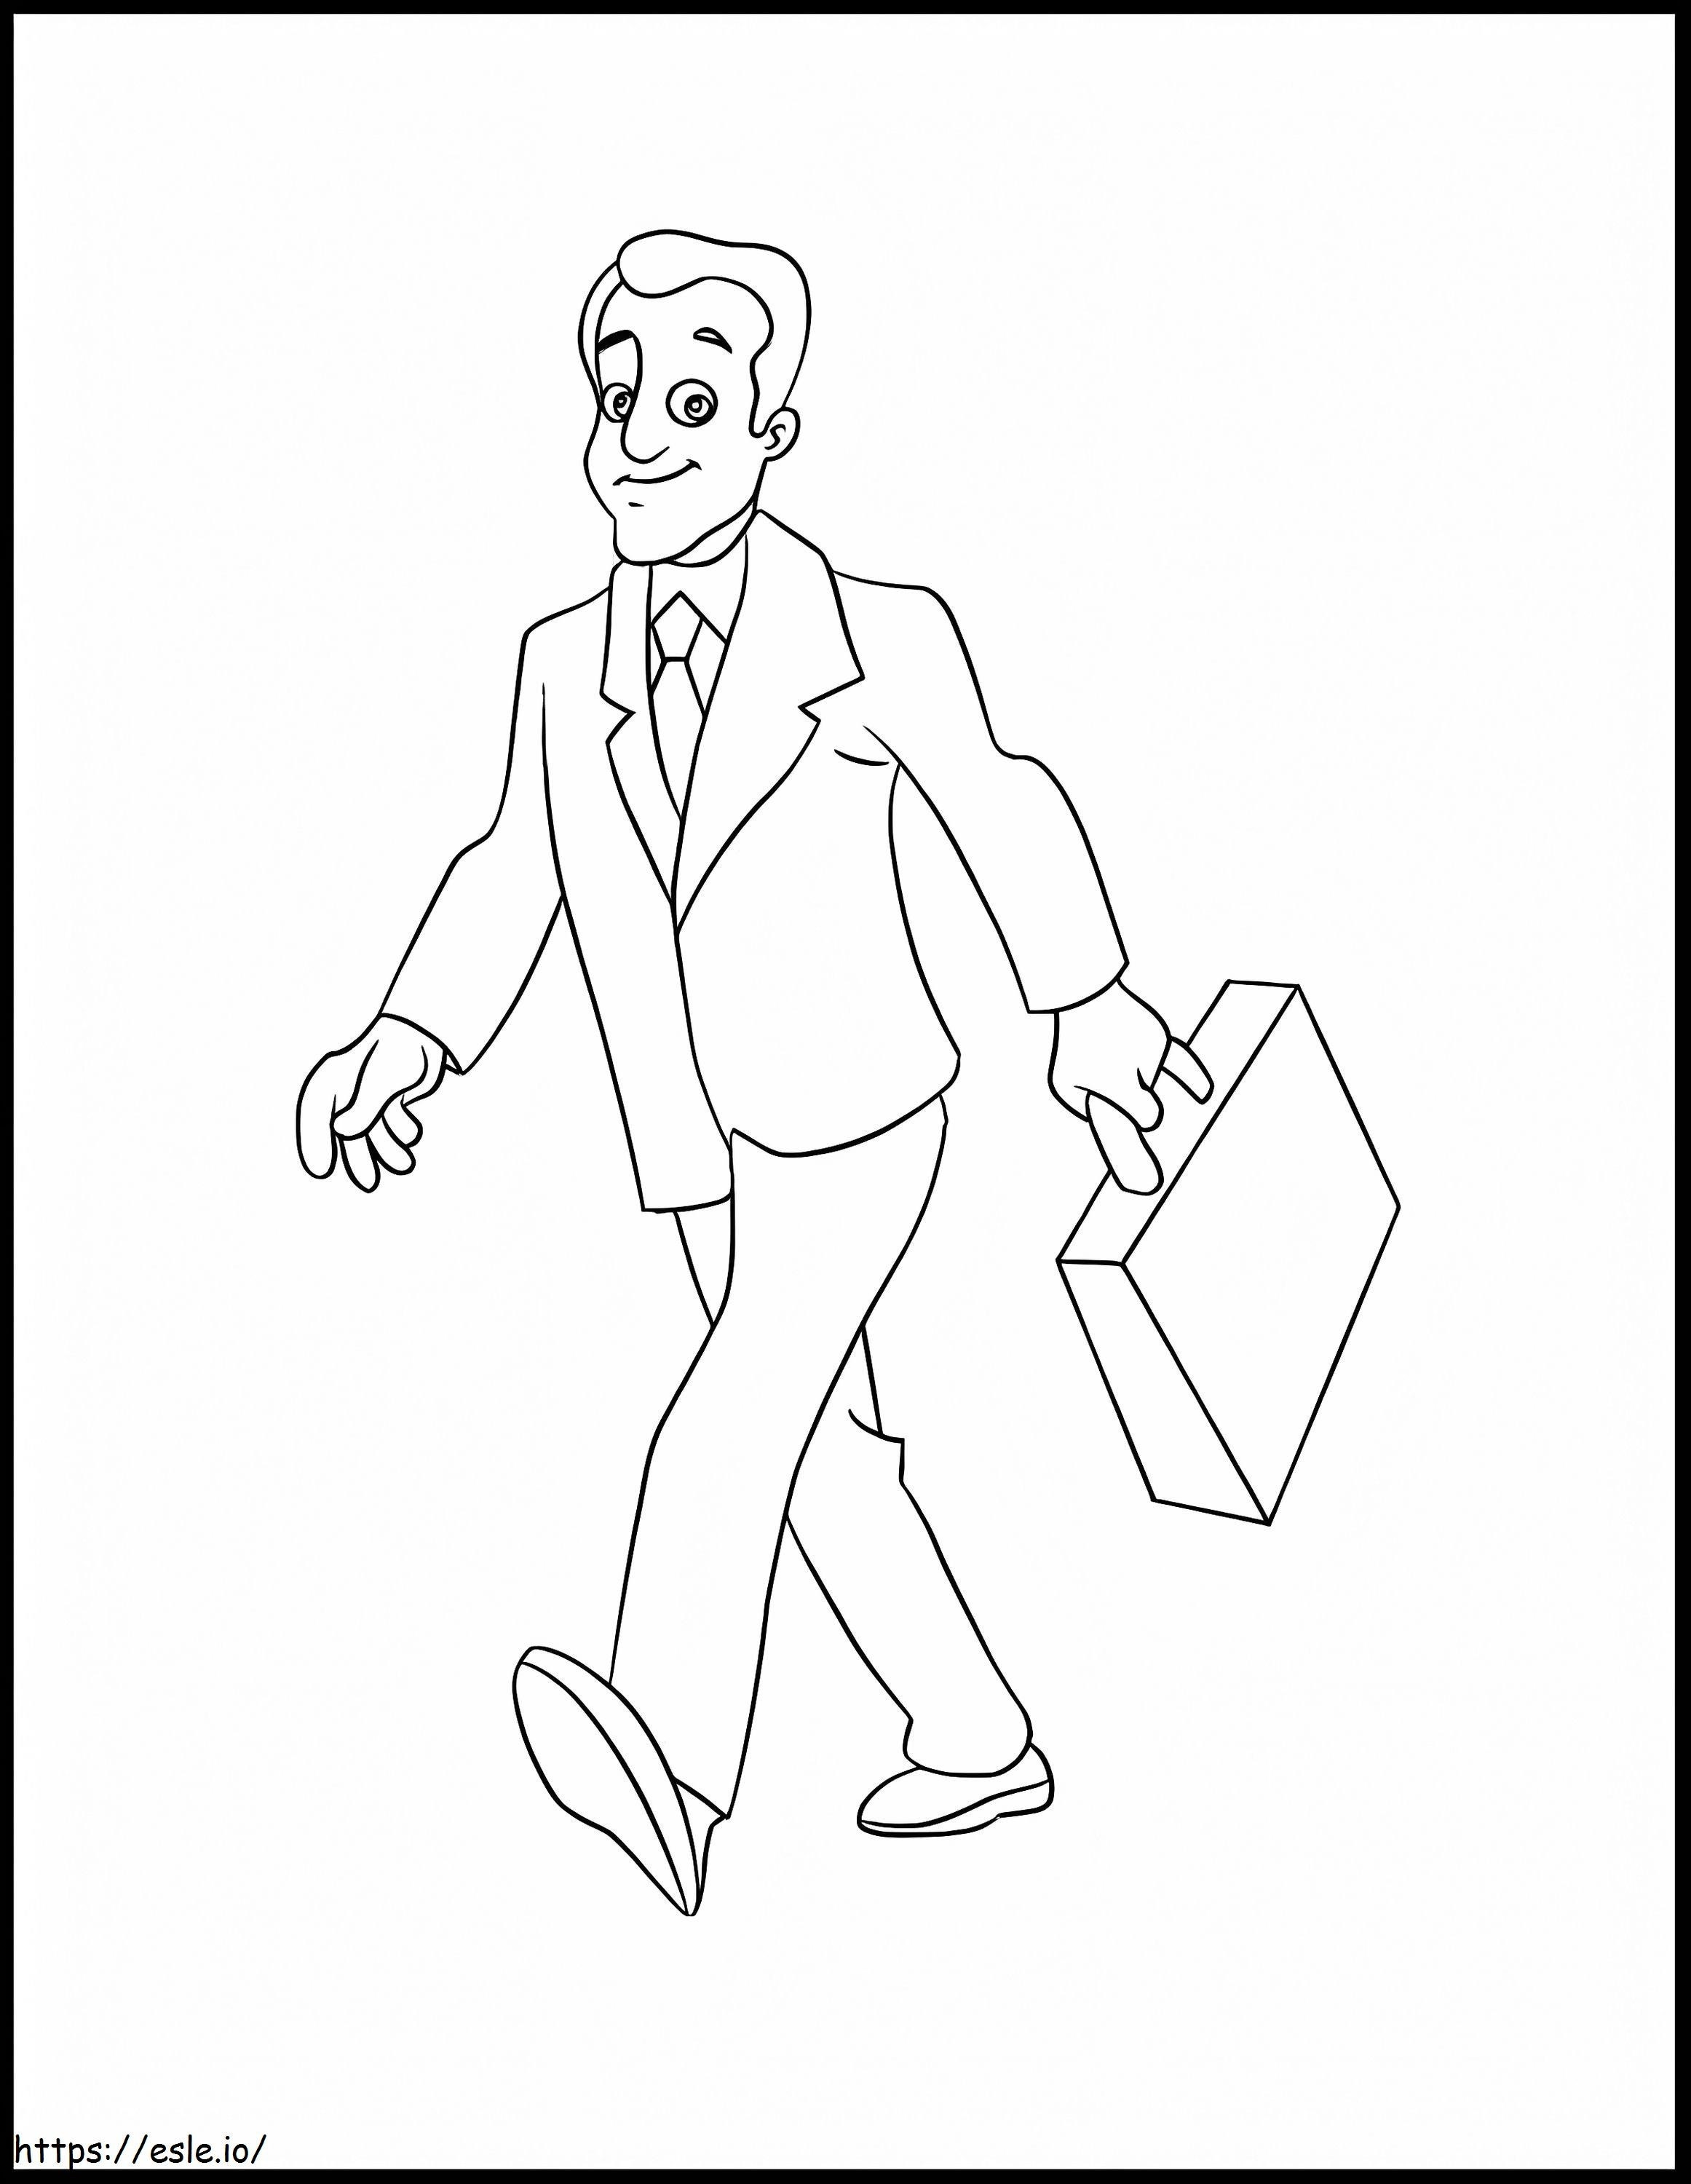 Smiling Walking Businessman coloring page